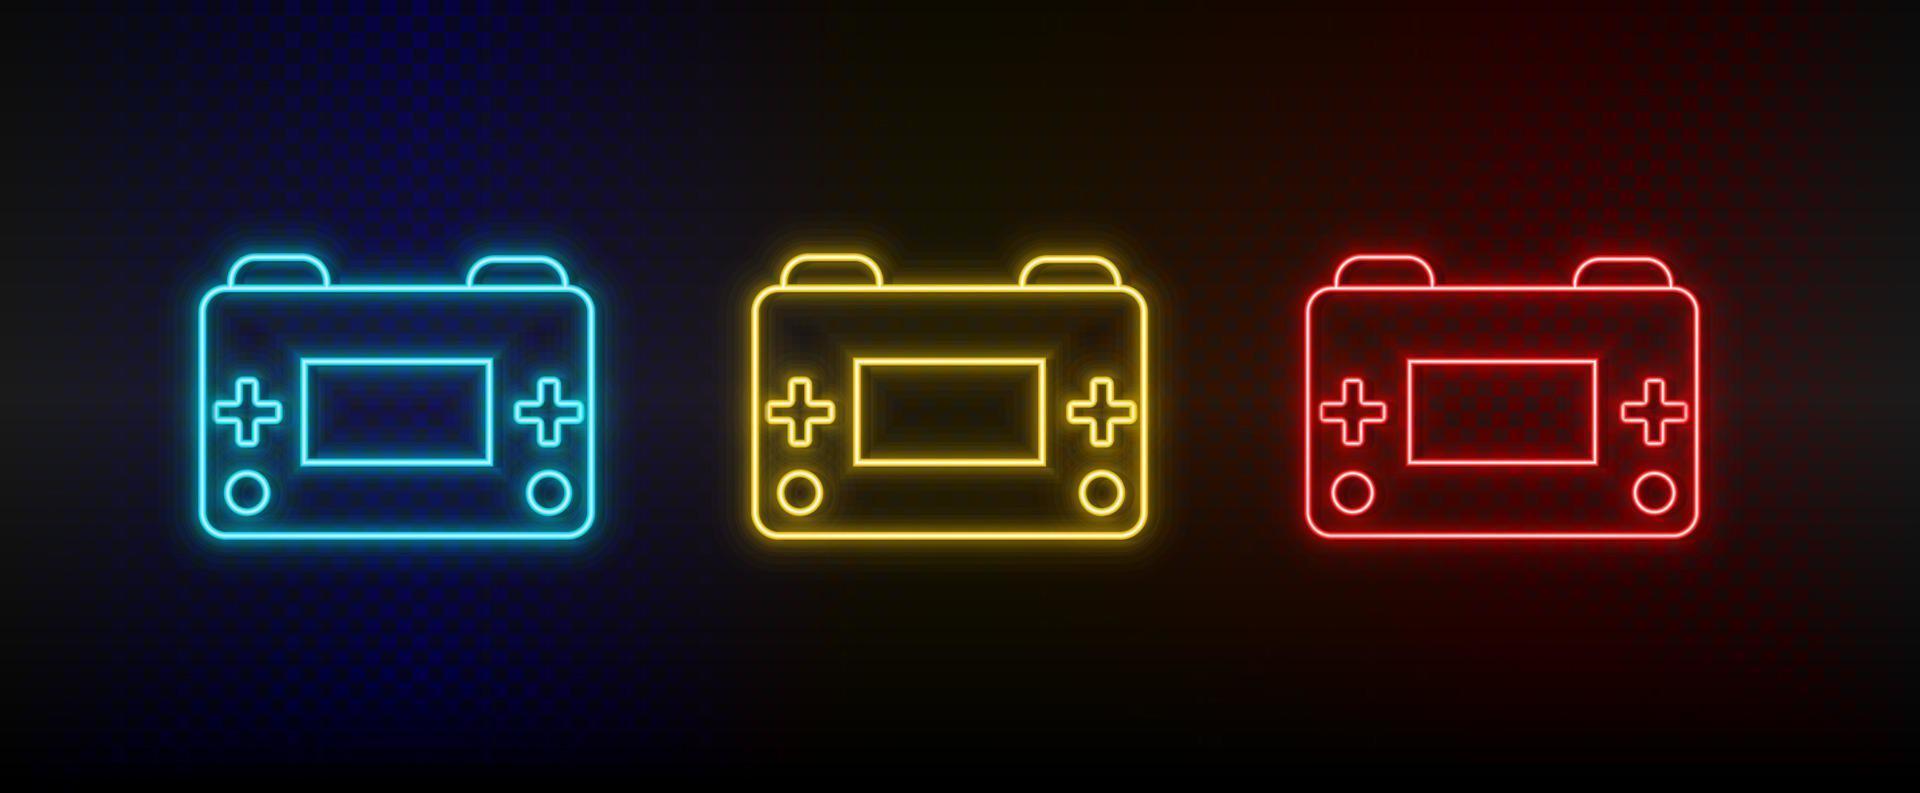 iconos de neón. consola de juegos de arcade retro. conjunto de icono de vector de neón rojo, azul, amarillo sobre fondo oscuro